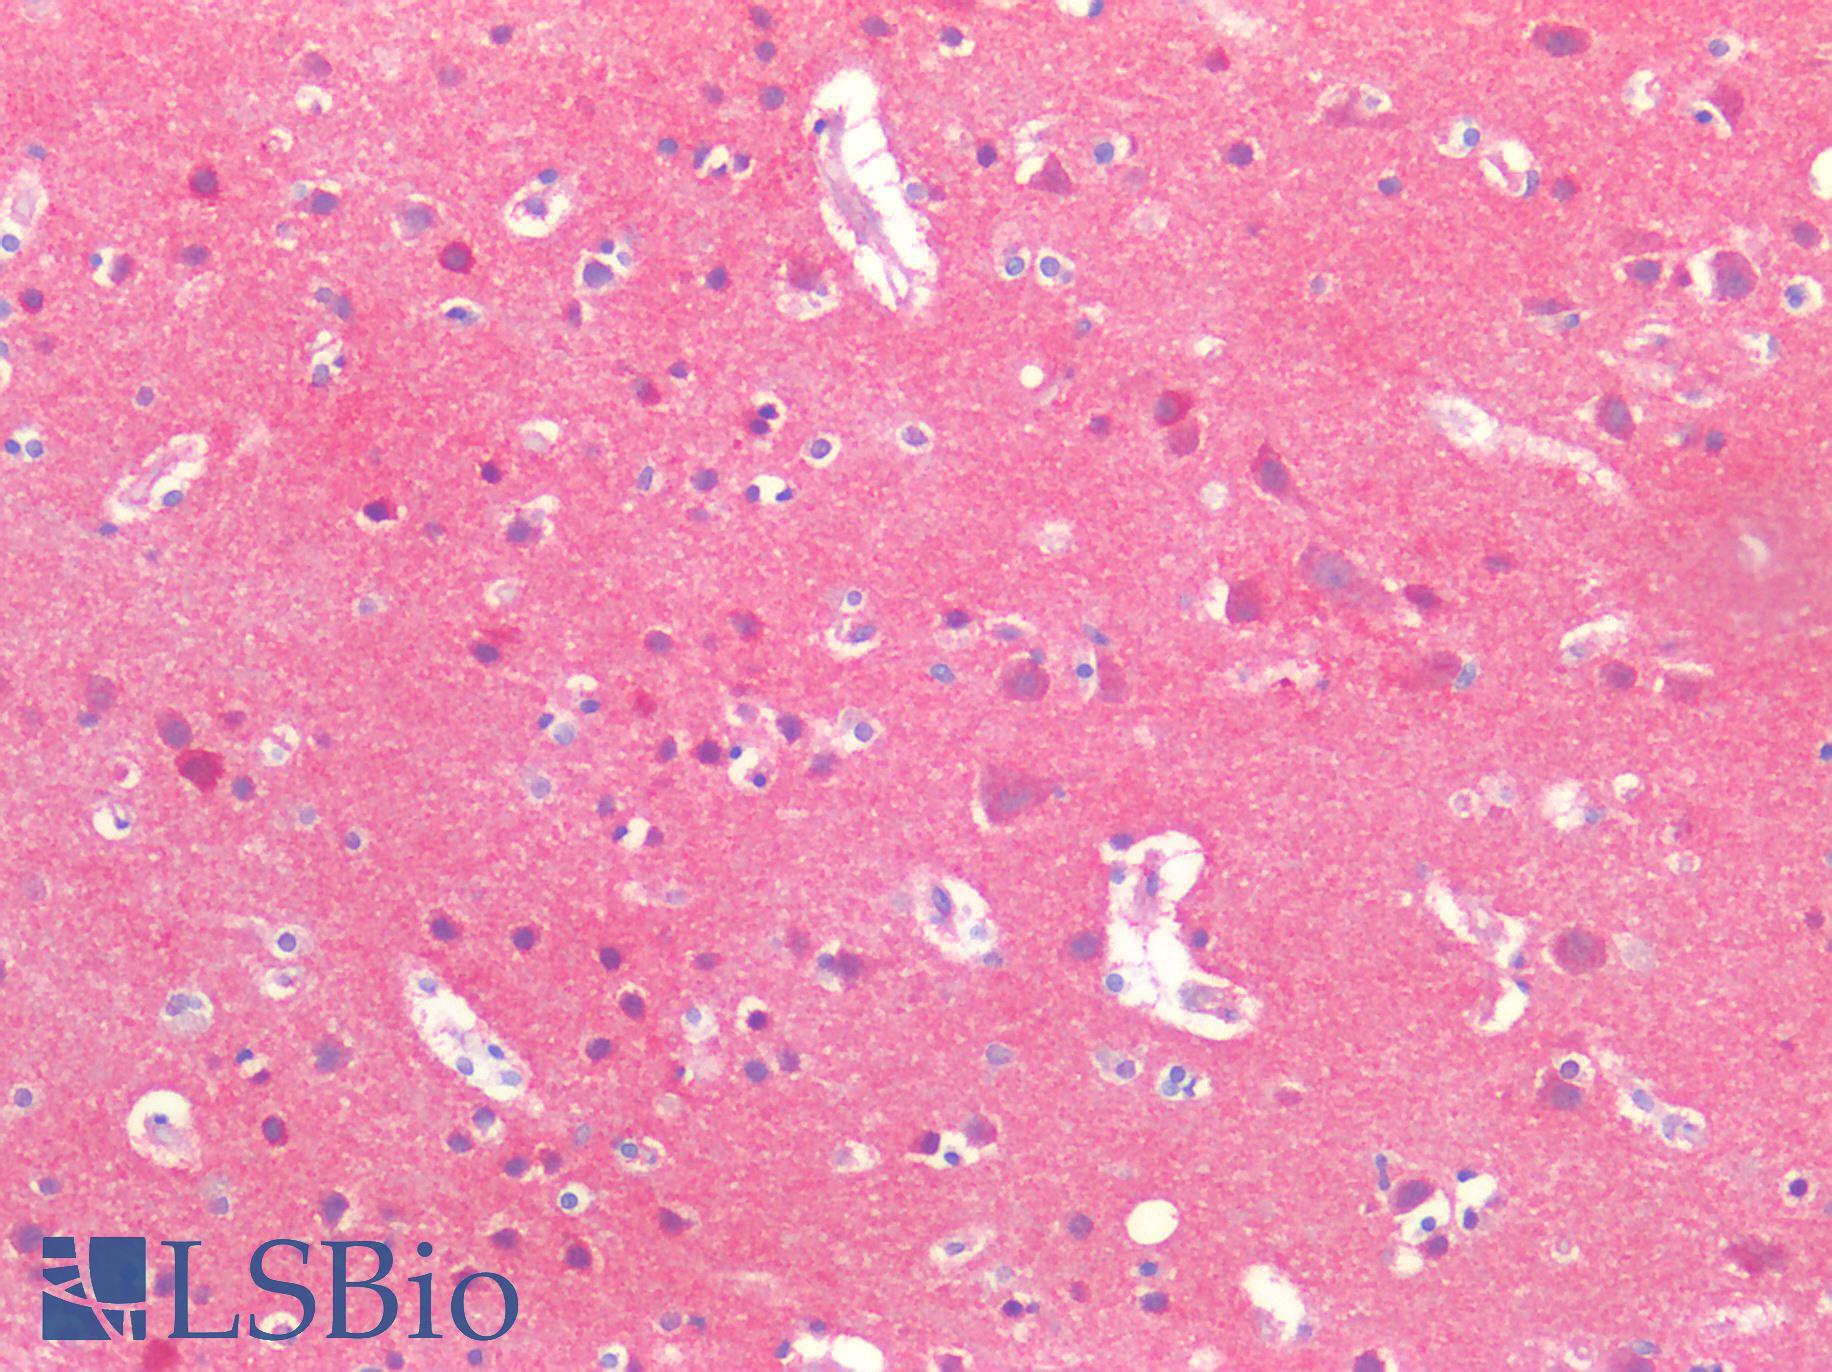 POSTN / Periostin Antibody - Human Brain, Cortex: Formalin-Fixed, Paraffin-Embedded (FFPE)